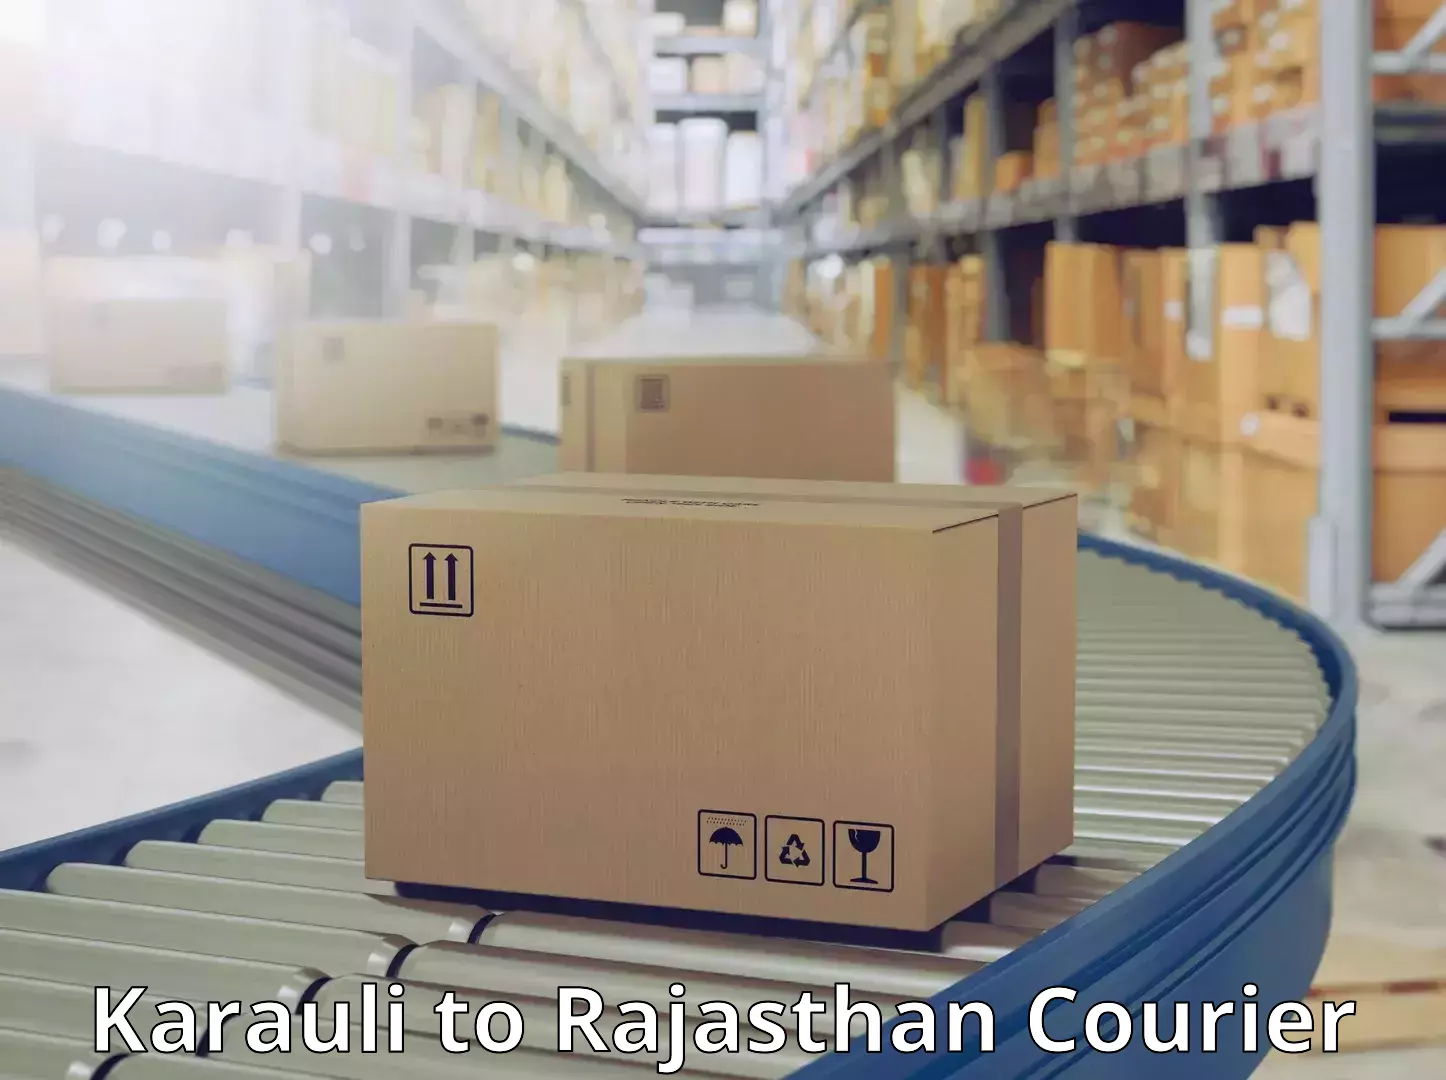 Courier service comparison Karauli to Rajasthan